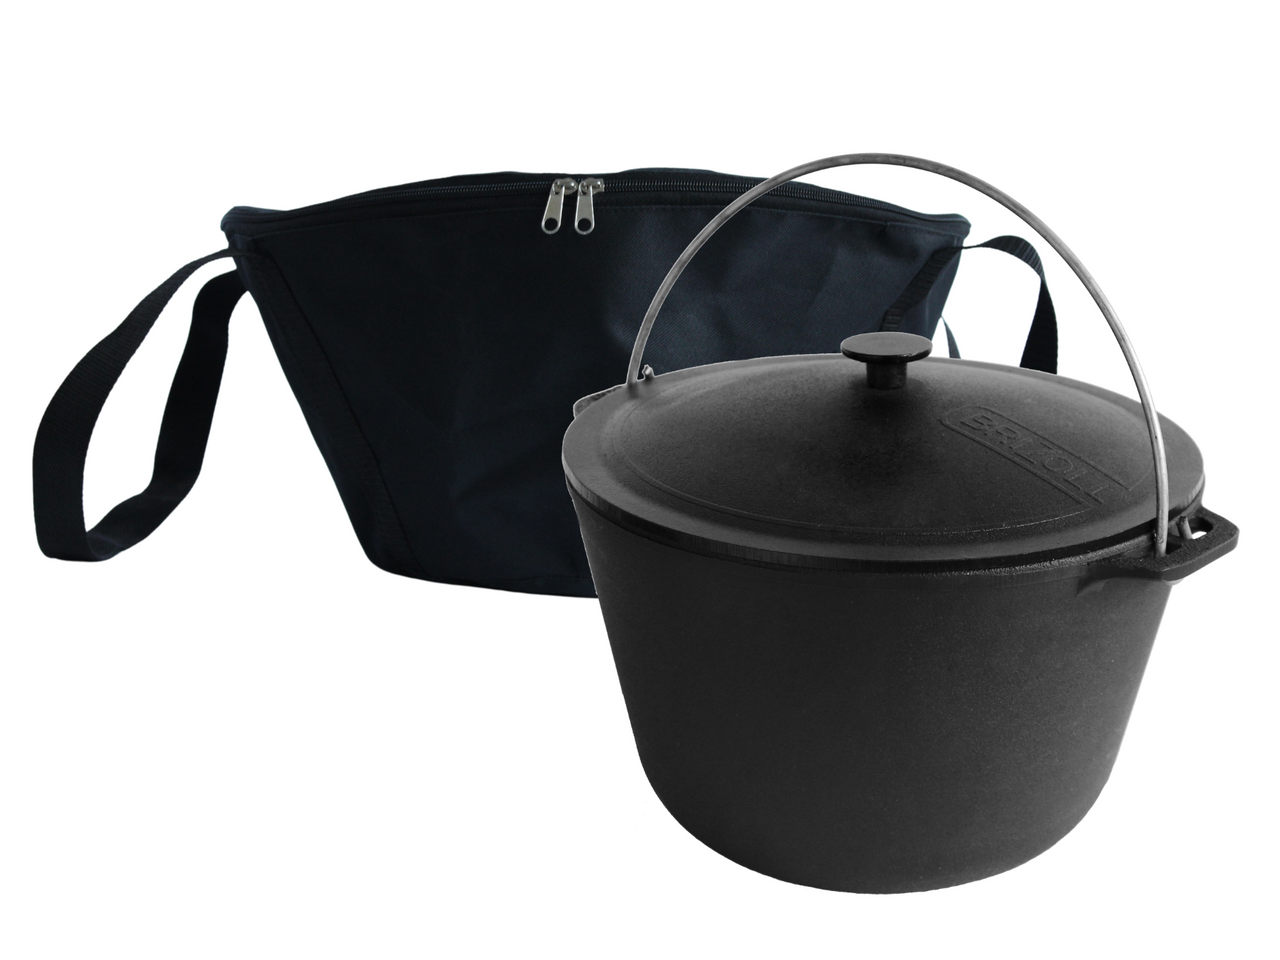 Tourist cast iron cauldron 6 l with lid and a bag